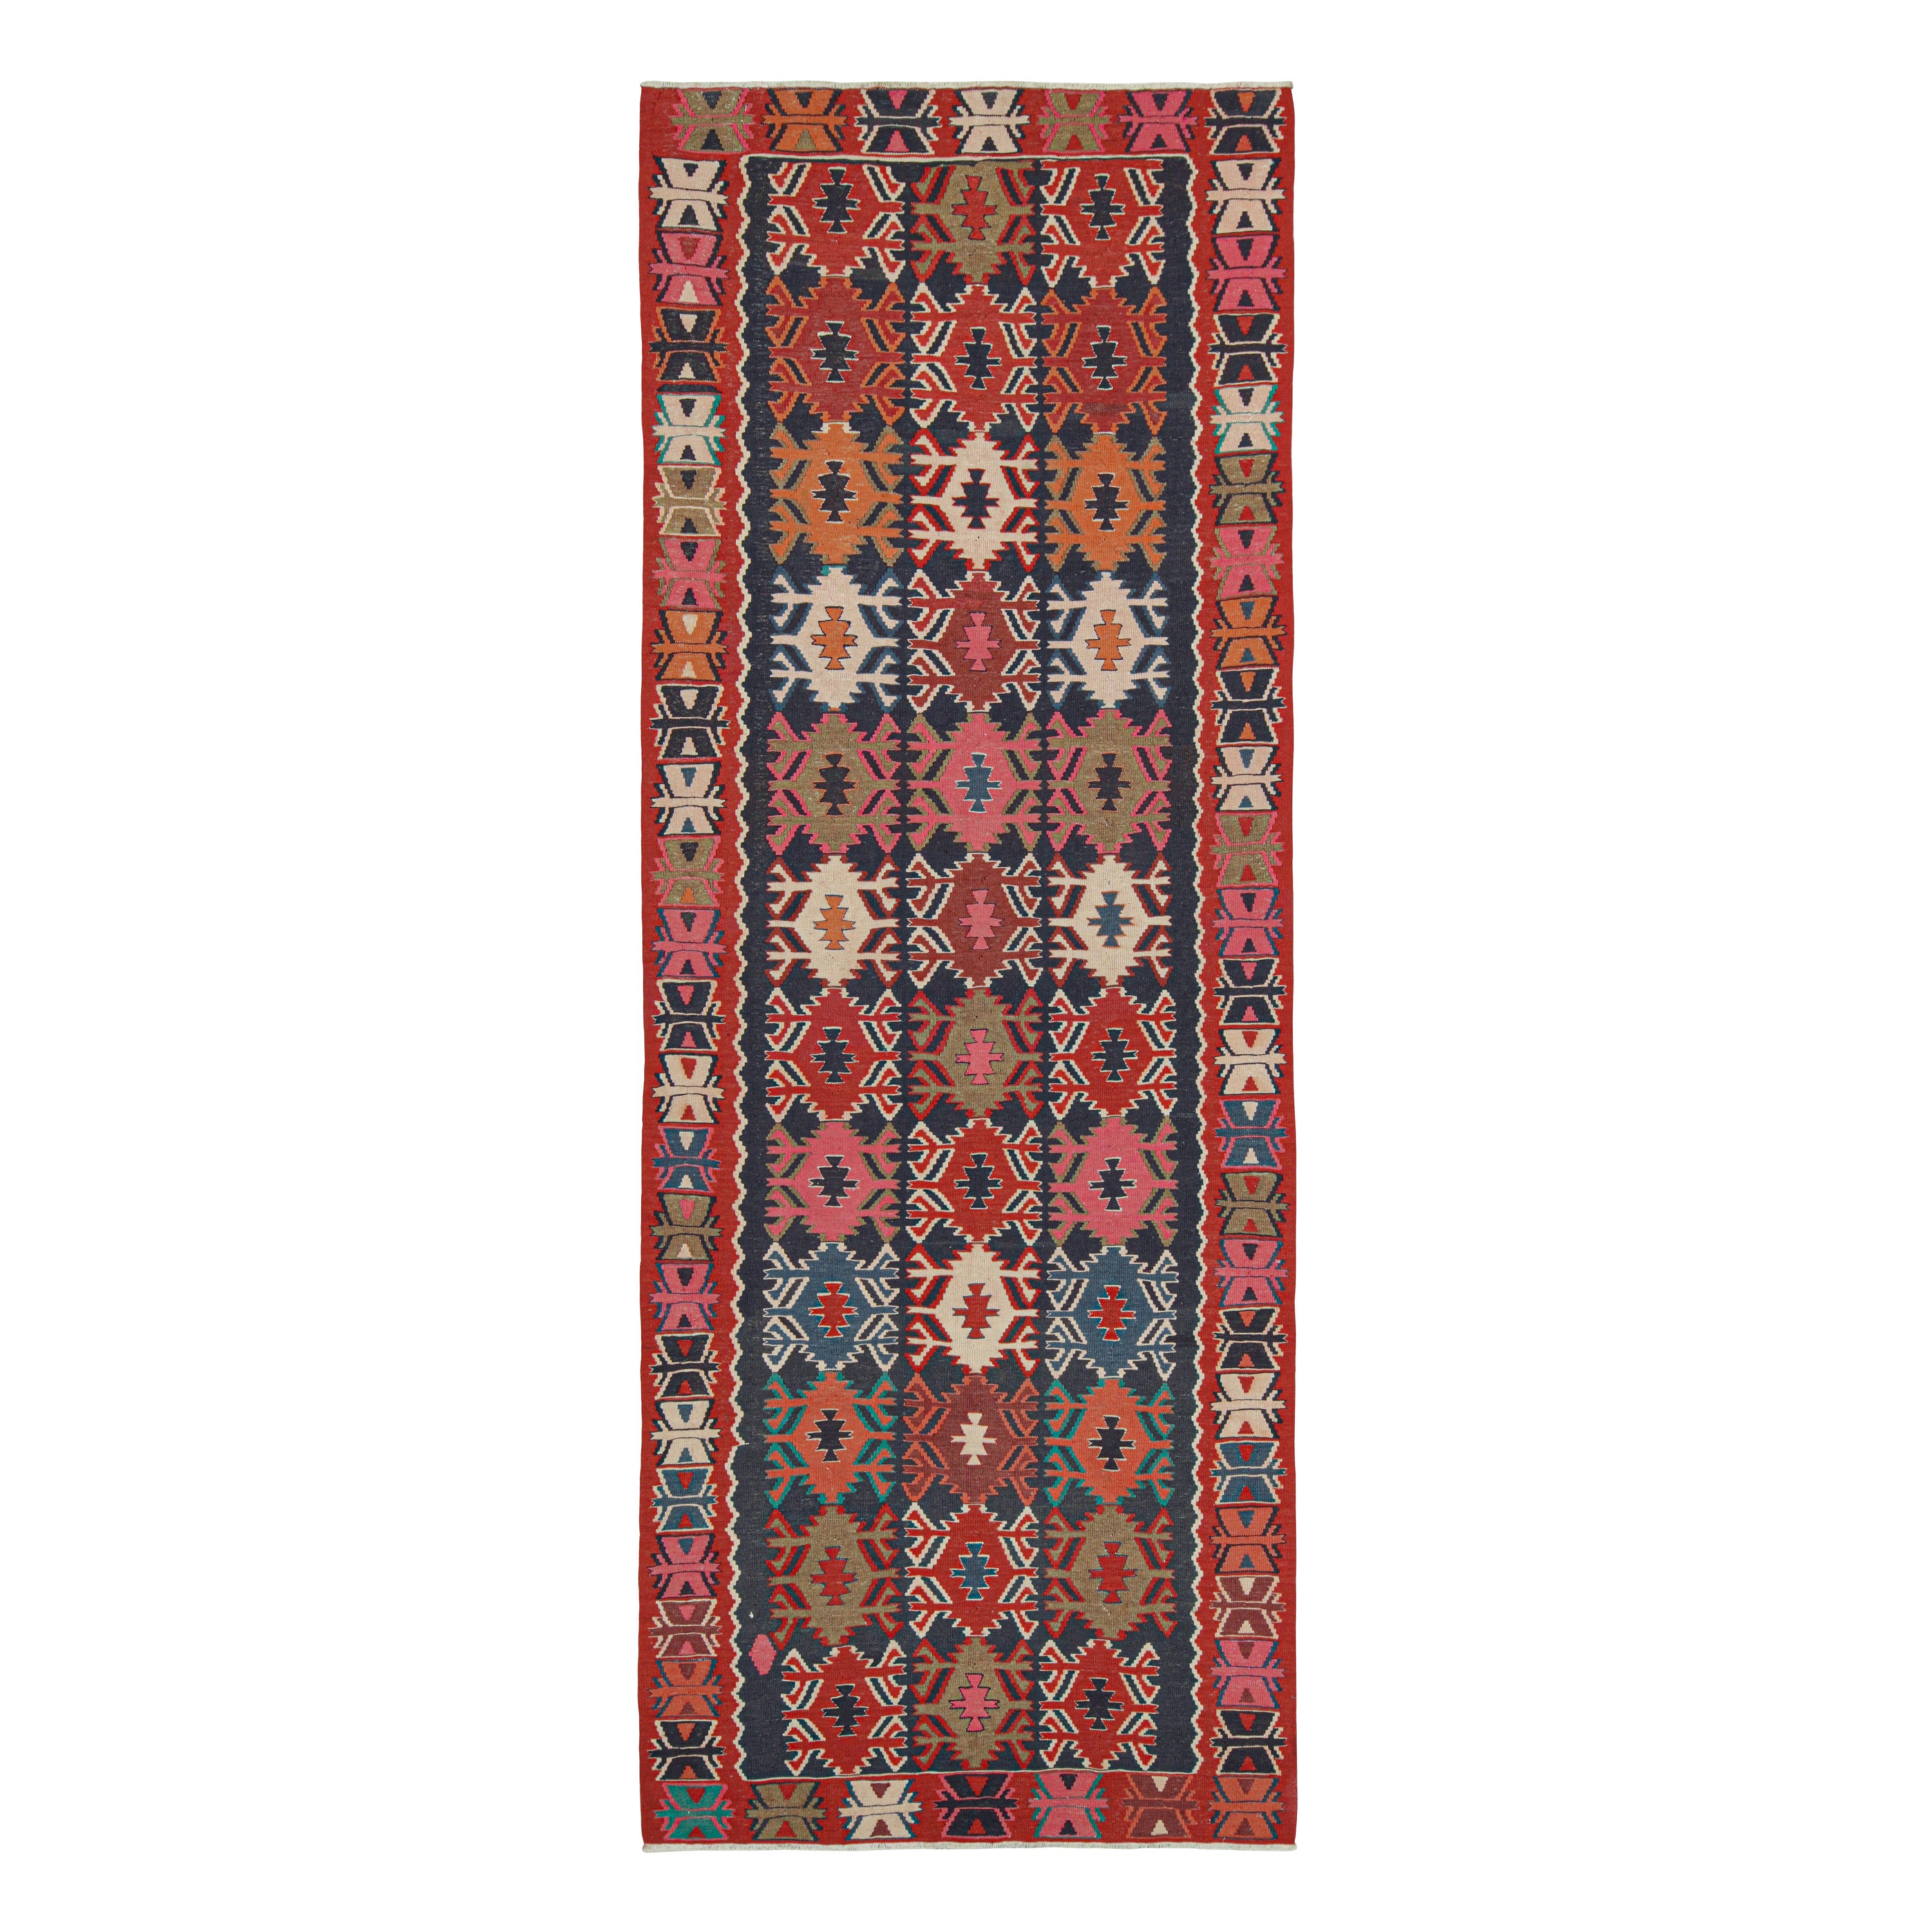 Vintage Northwest Persian Kilim with Colorful Geometric Patterns by Rug & Kilim